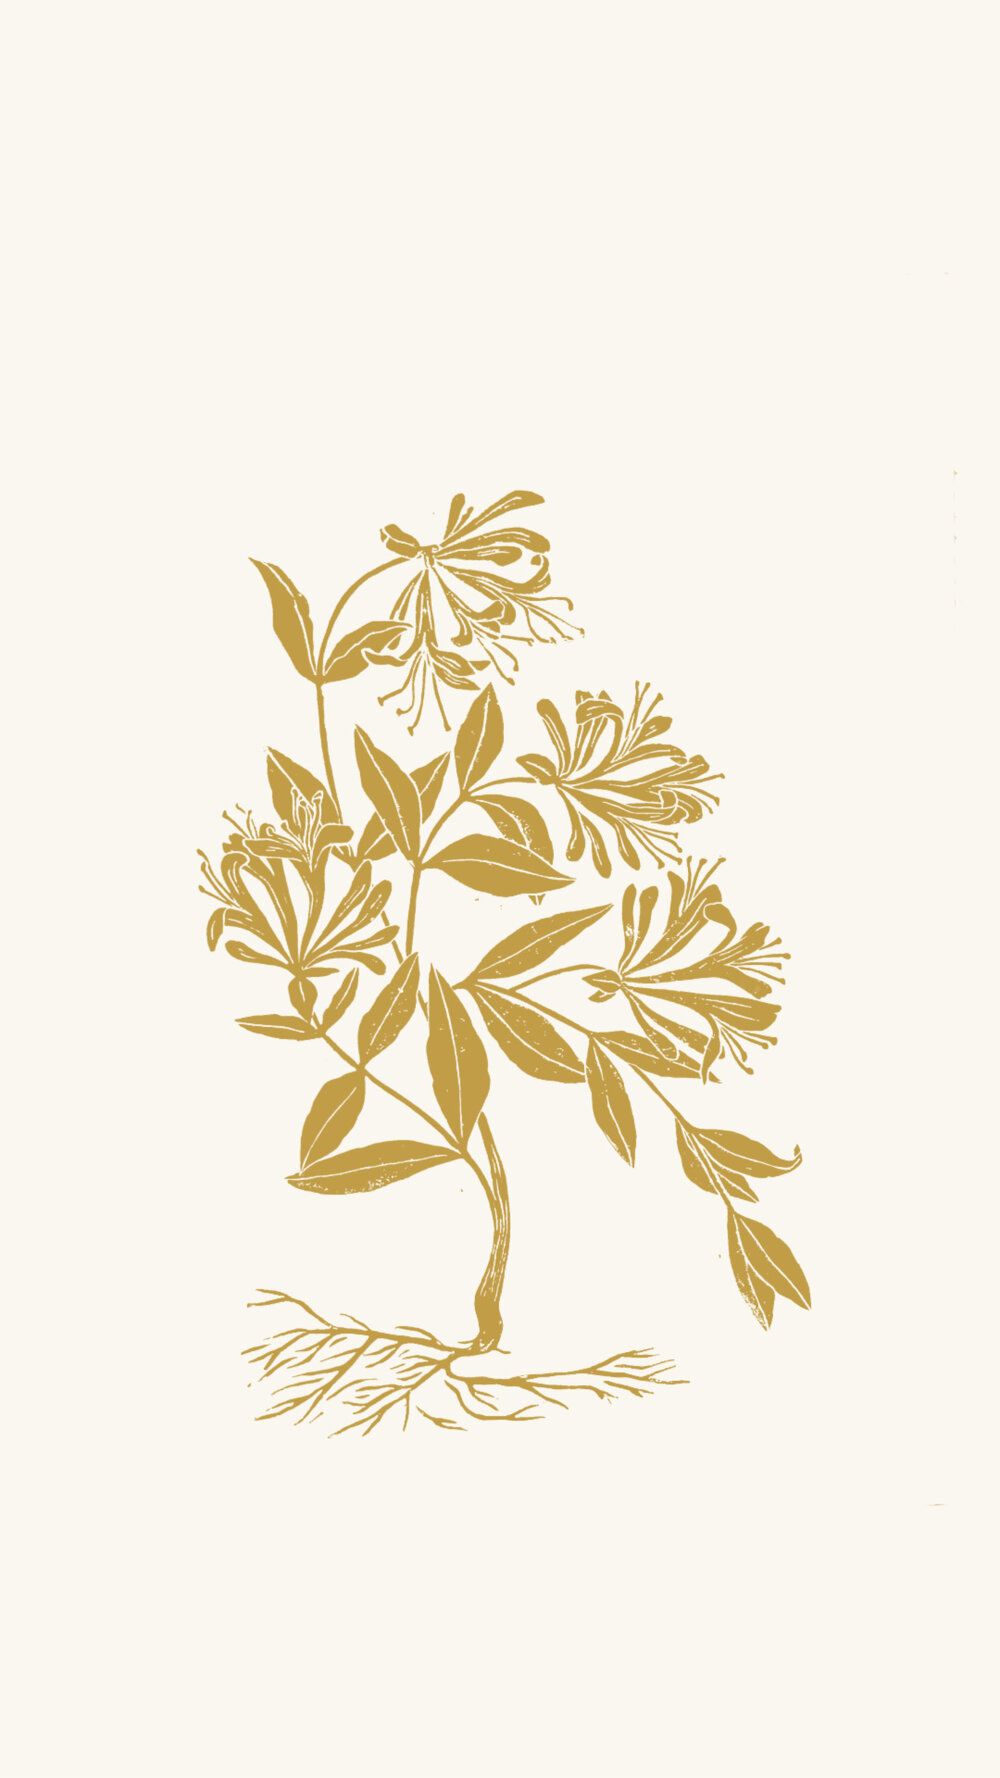 A gold illustration of a honeysuckle plant - June